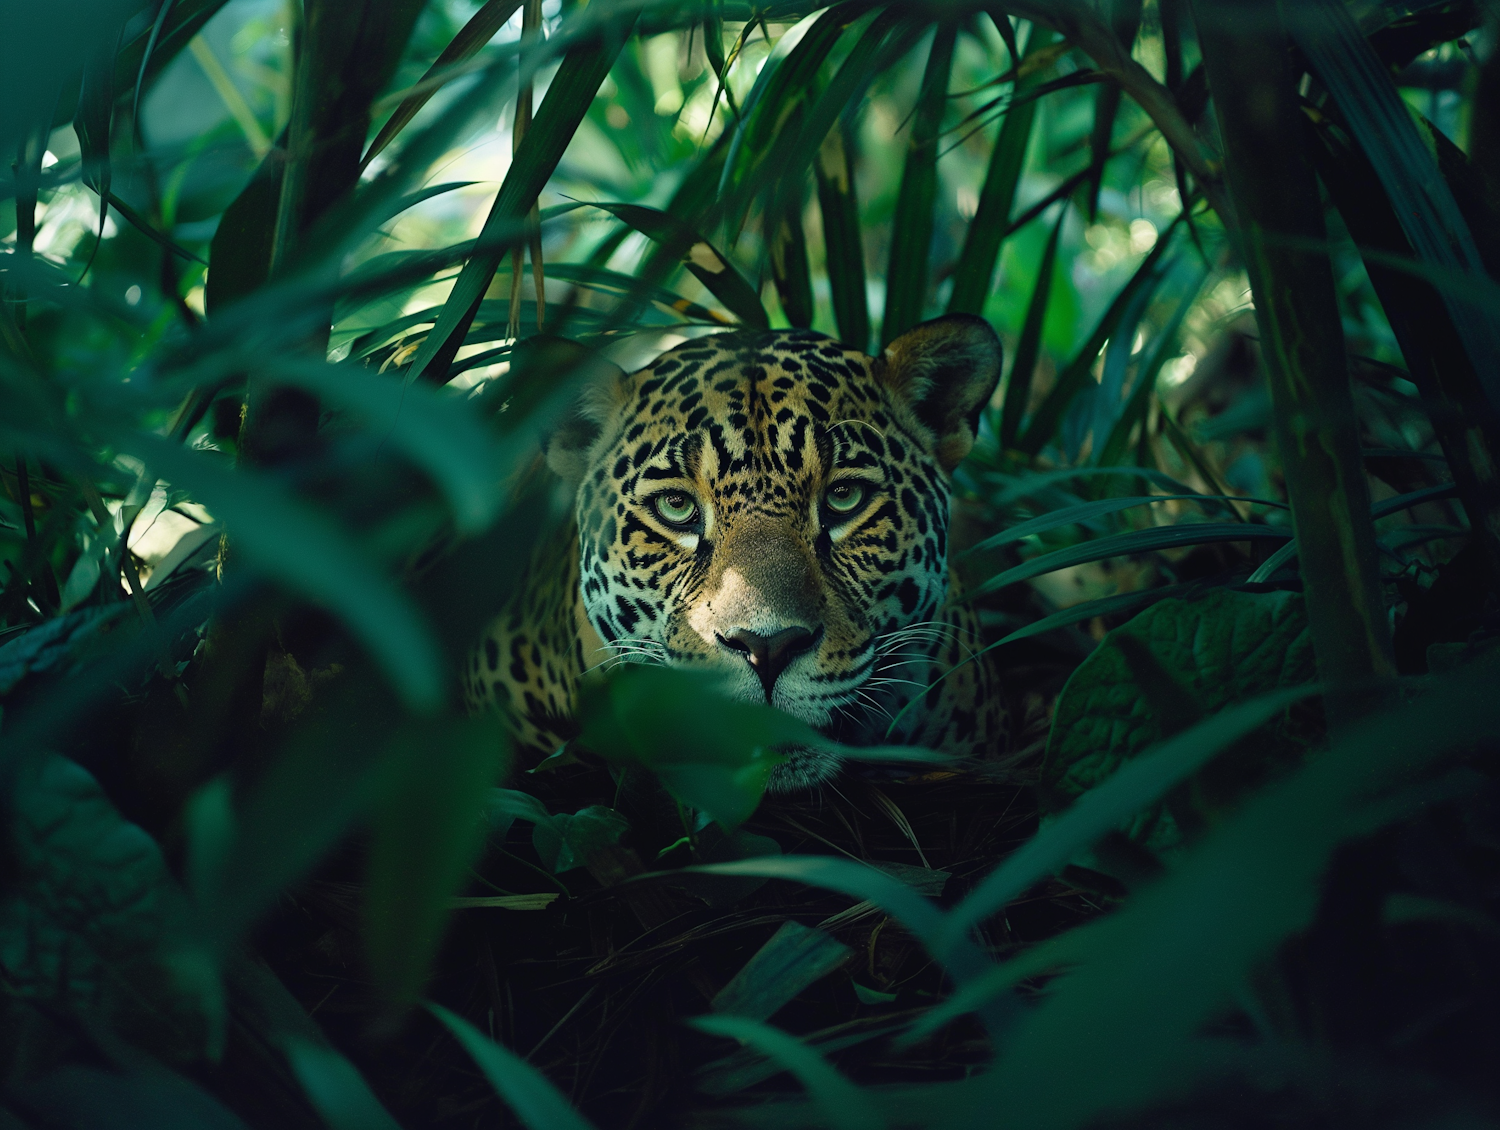 Camouflaged Jaguar in Habitat